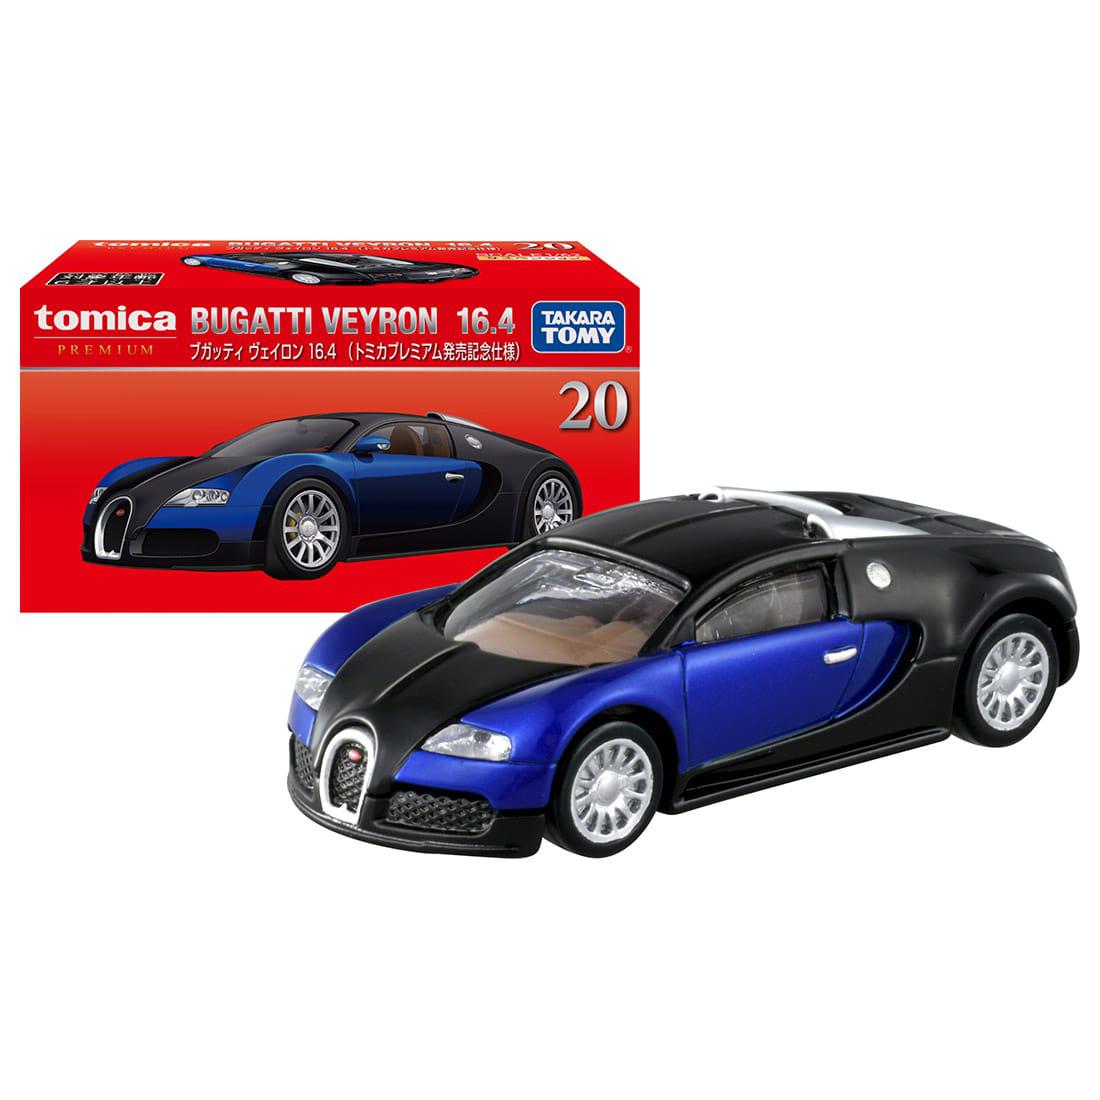 Tomica Premium 20 Bugatti Veyron 16.4 Tomica Premium Release Commemorative Spec 